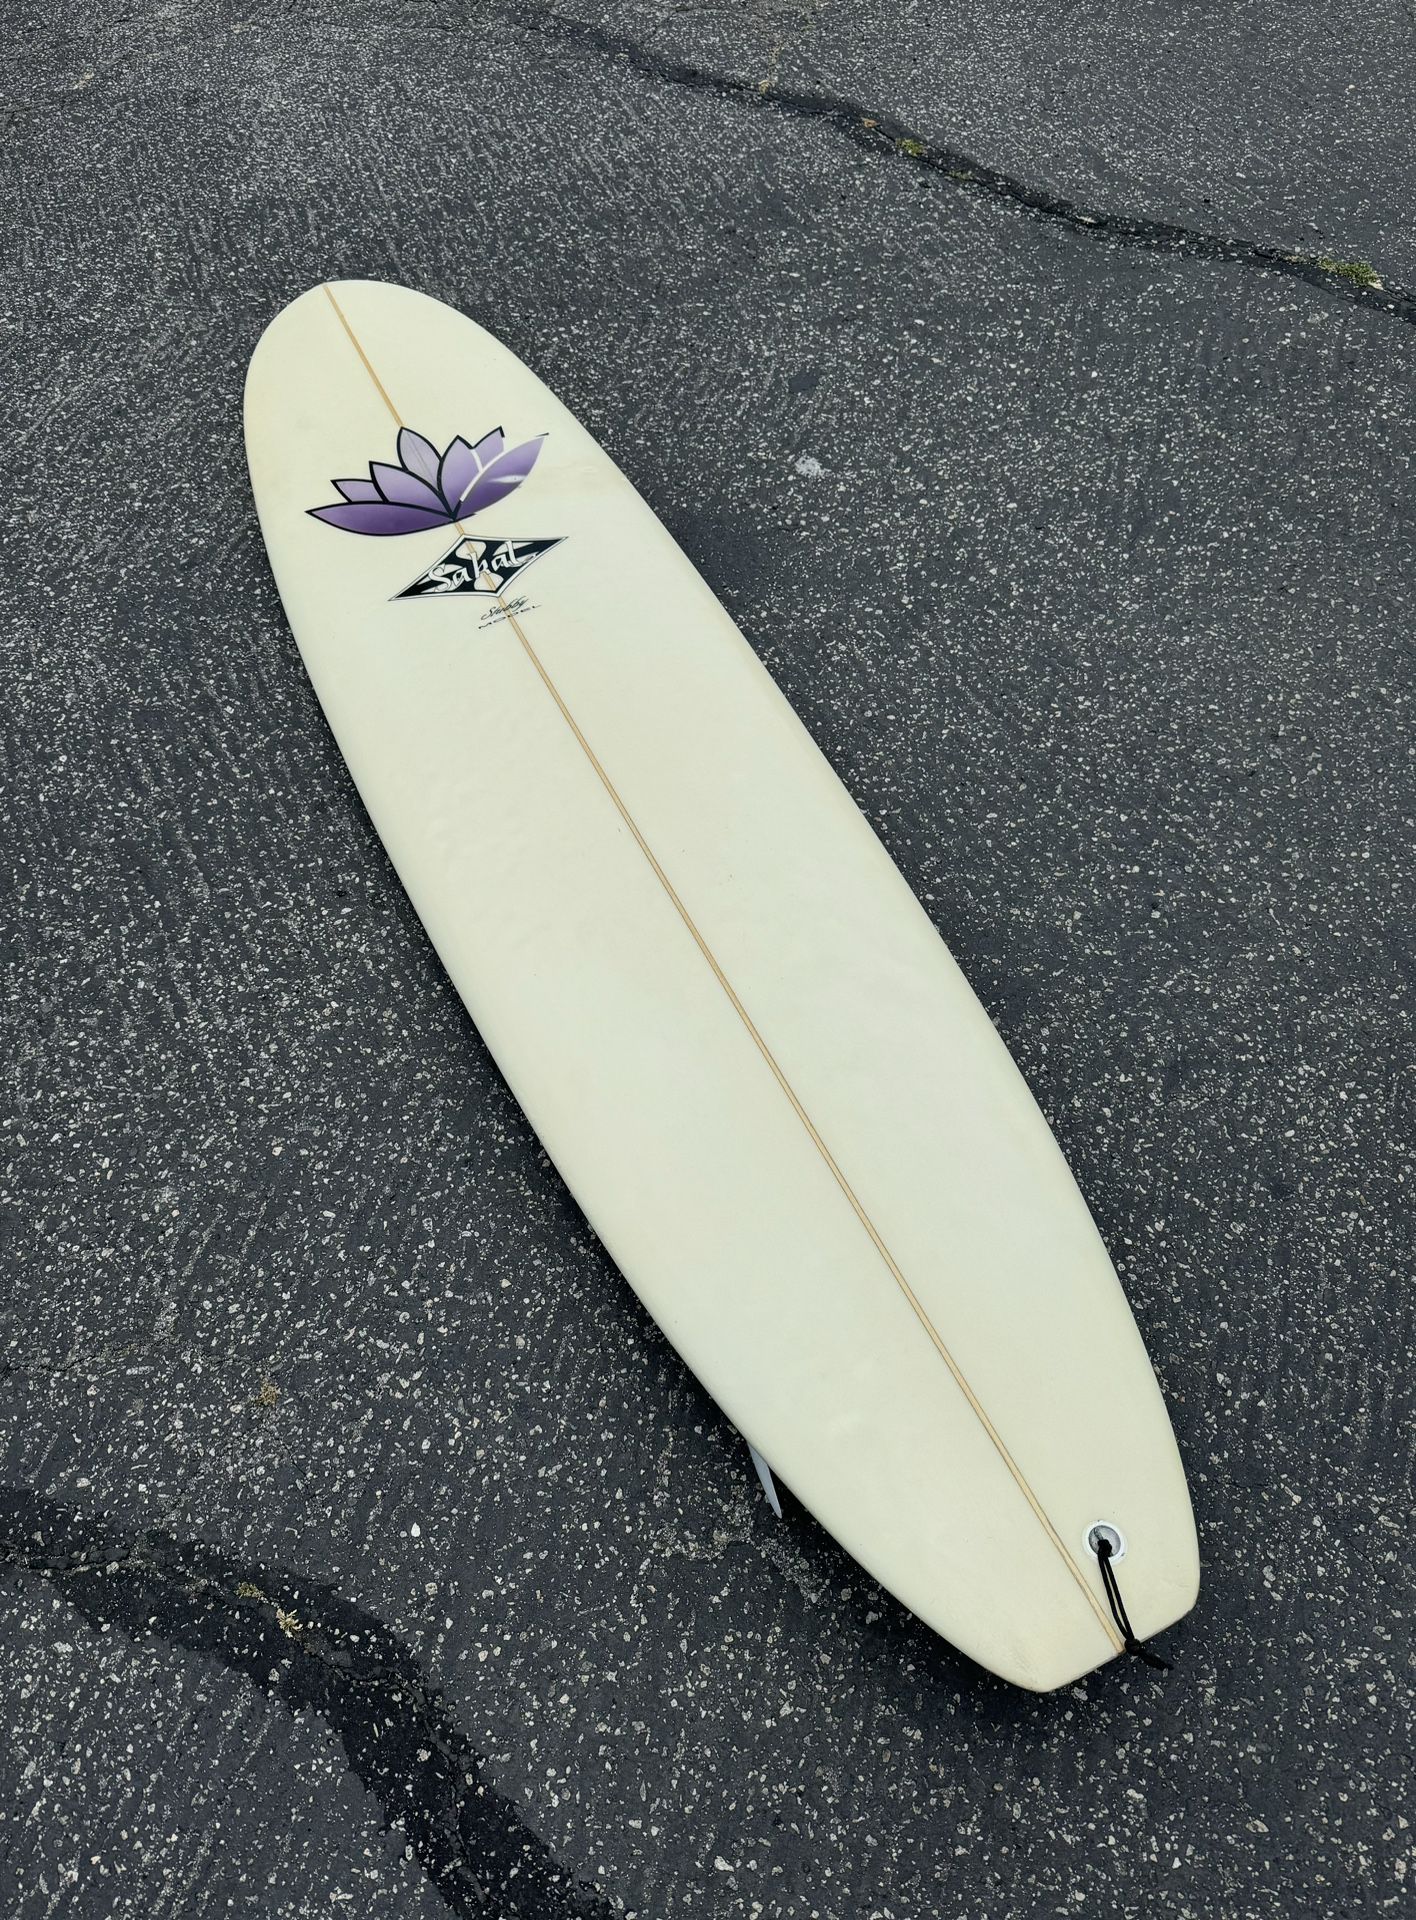 Sakal 7’4” Surfboard